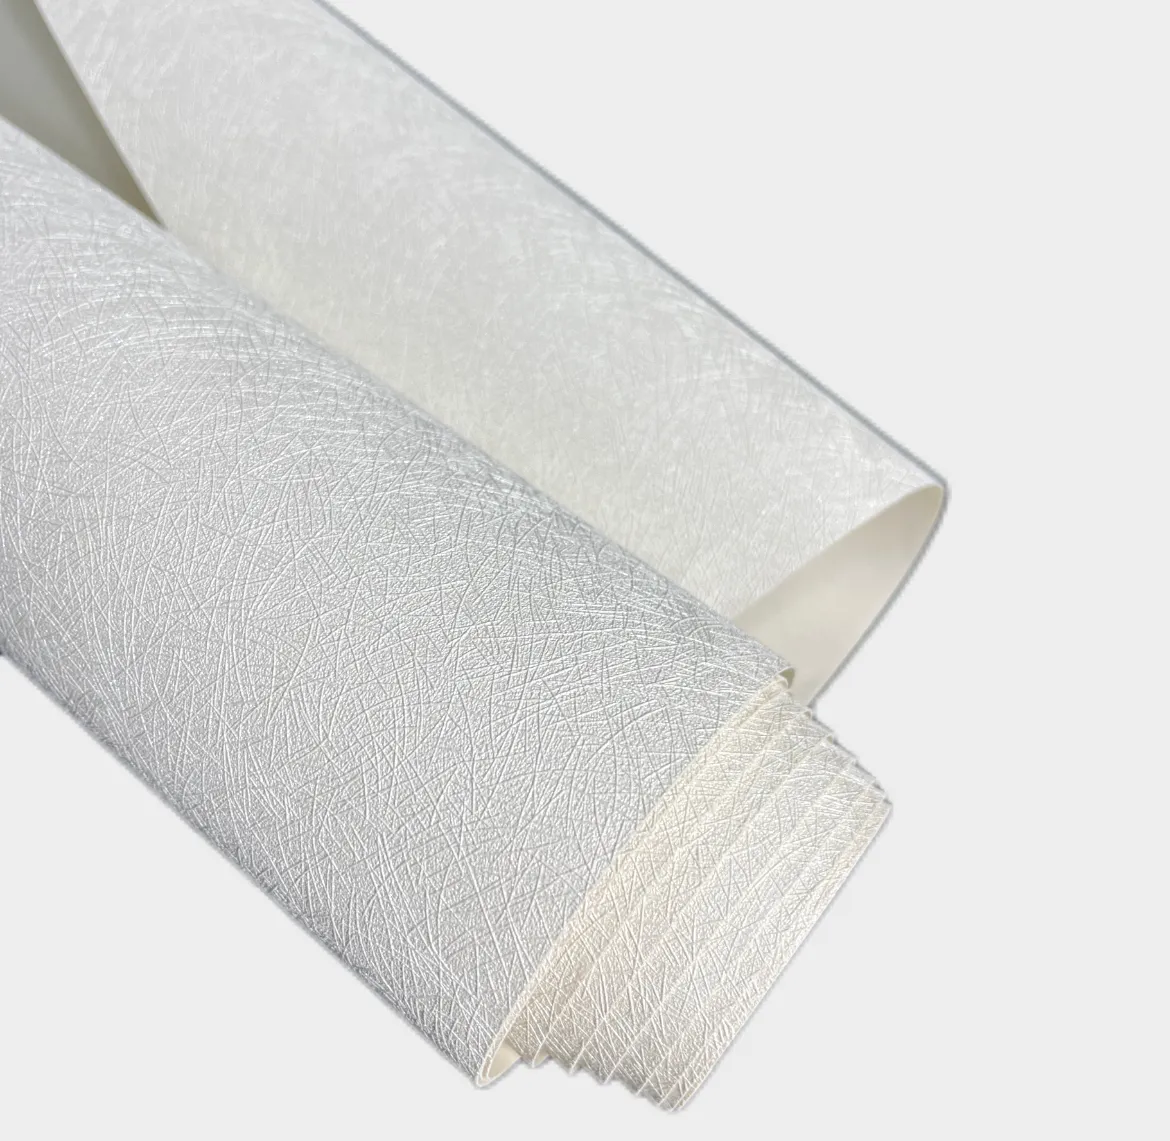 PVC Vinyl Wallpaper Druckbare Tapeten rollen Stroh Textur Fit für UV/Latex/Öko-Lösungsmittel Druck Innendekoration